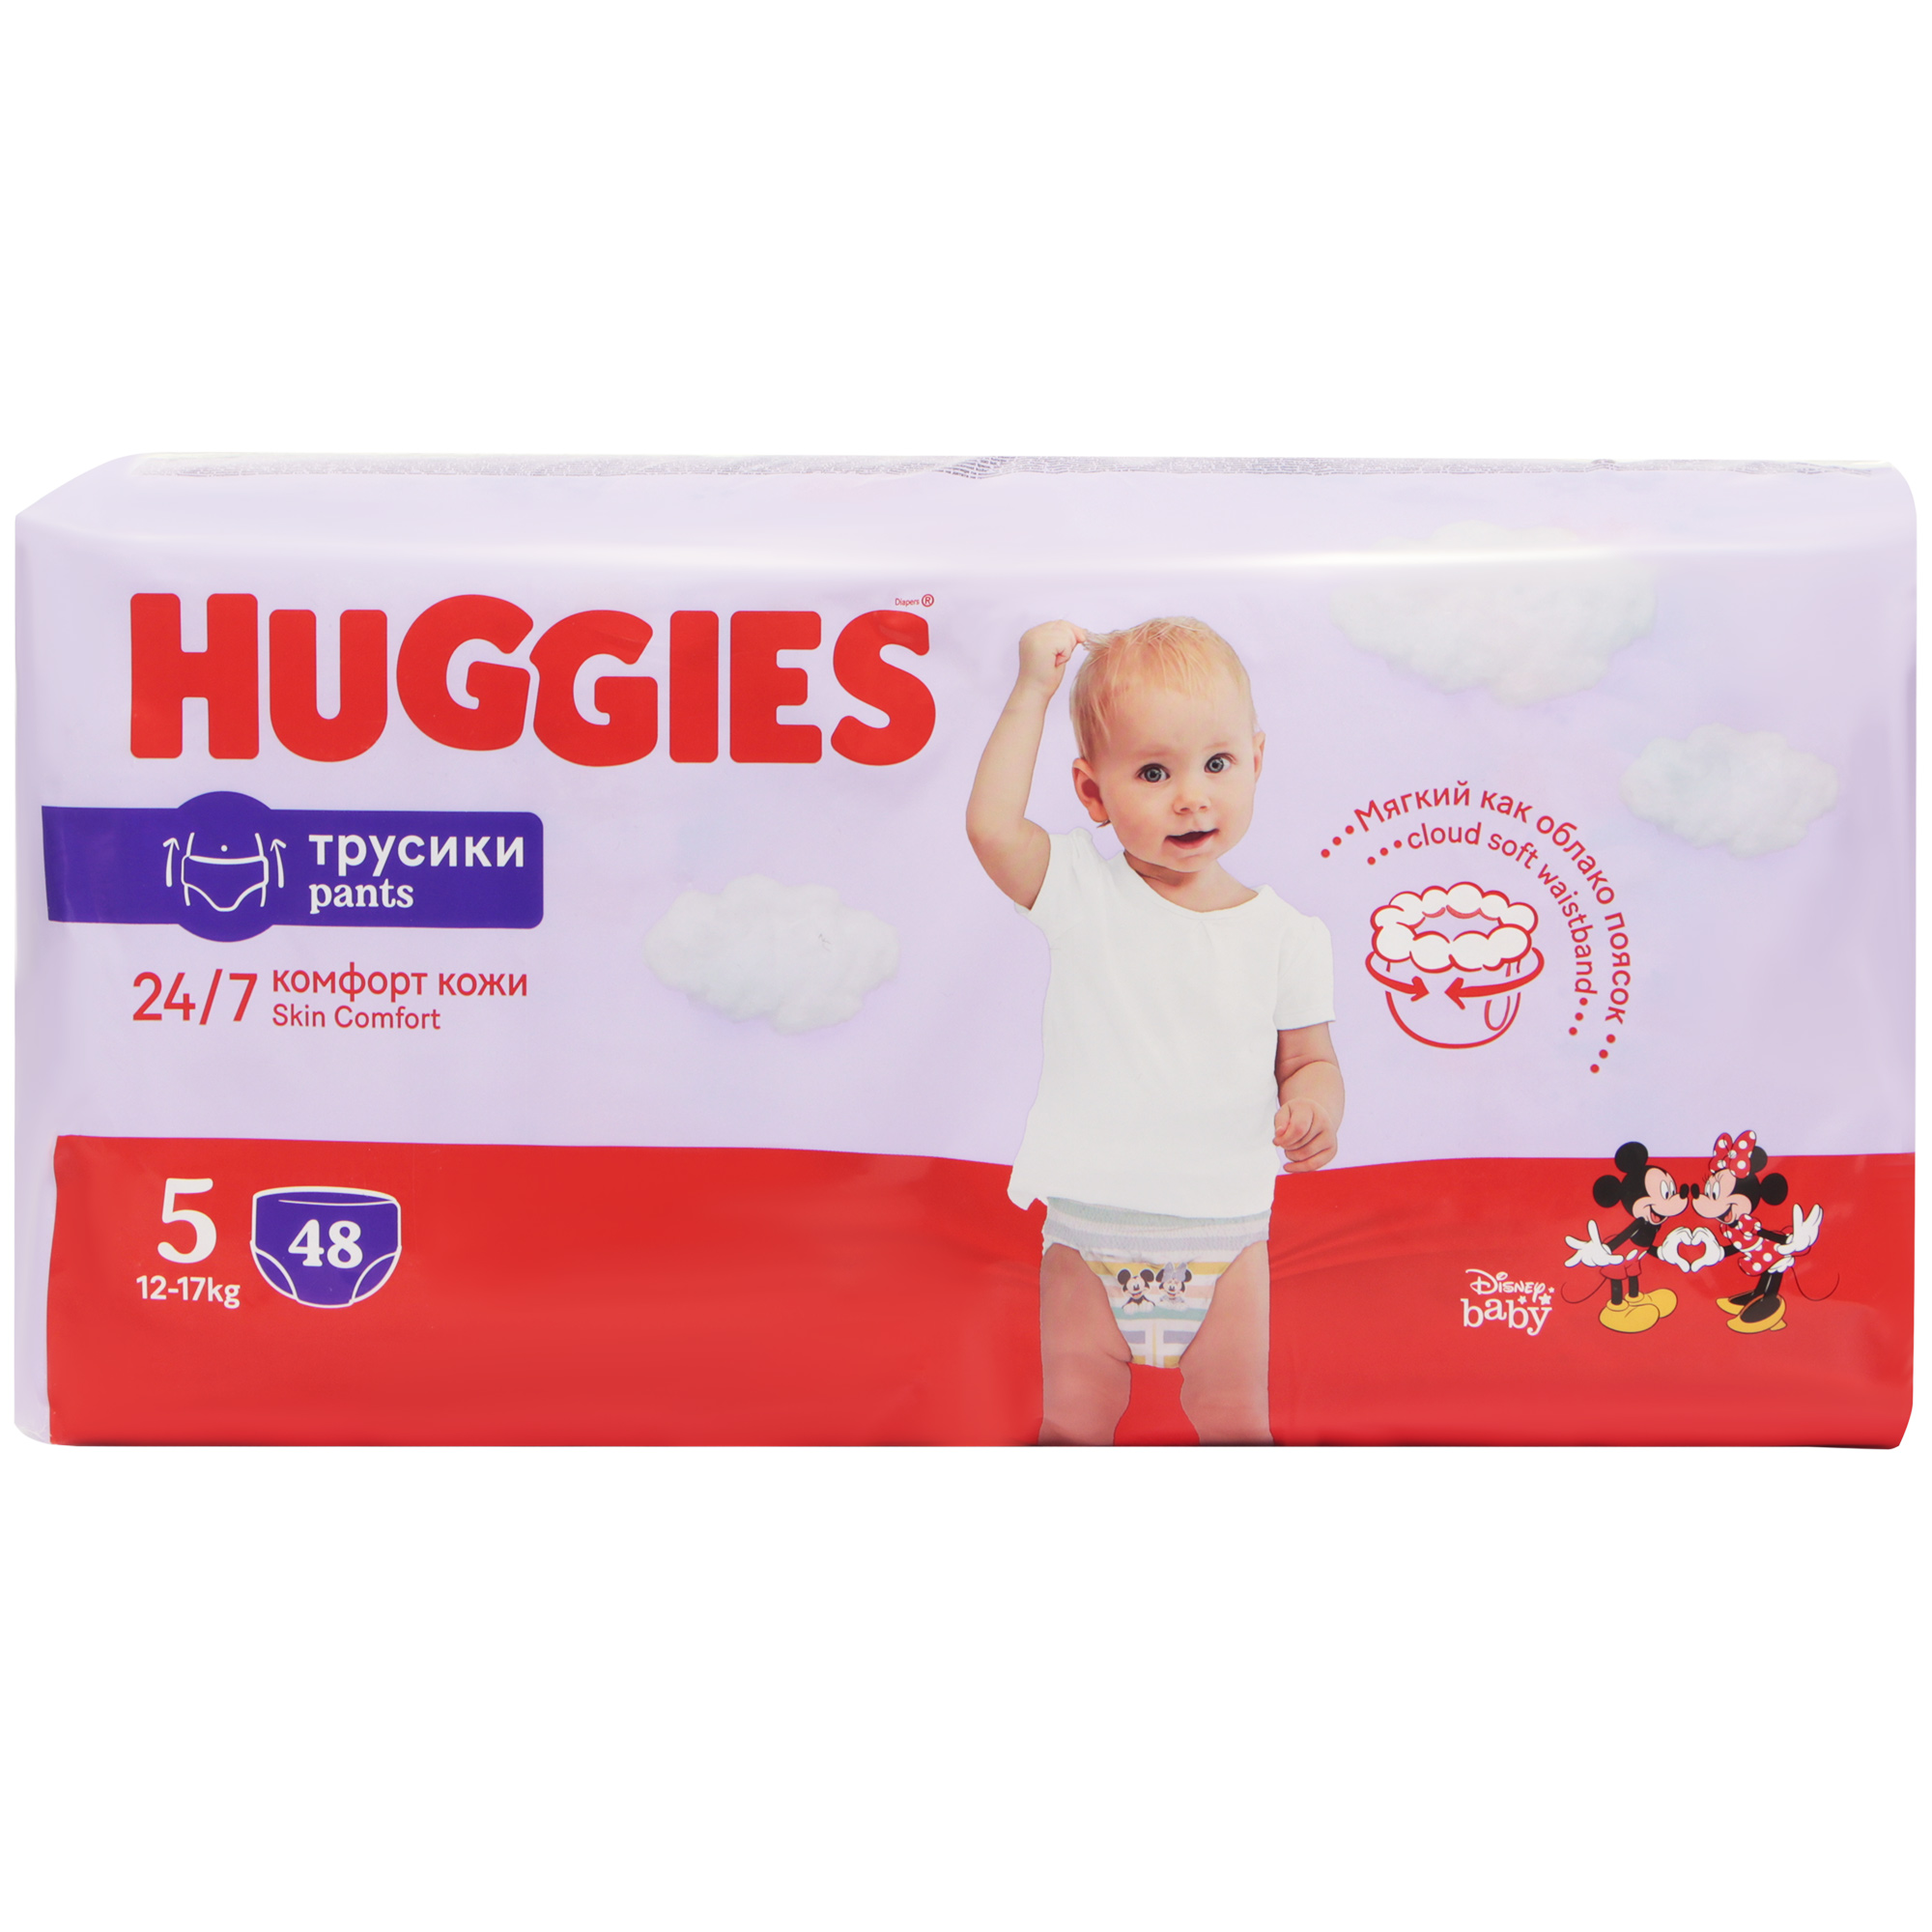 Трусики Huggies, размер 5, 12-17 кг, 48 шт трусики подгузники для плавания huggies little swimmers 2 3 3 8 кг 12 шт